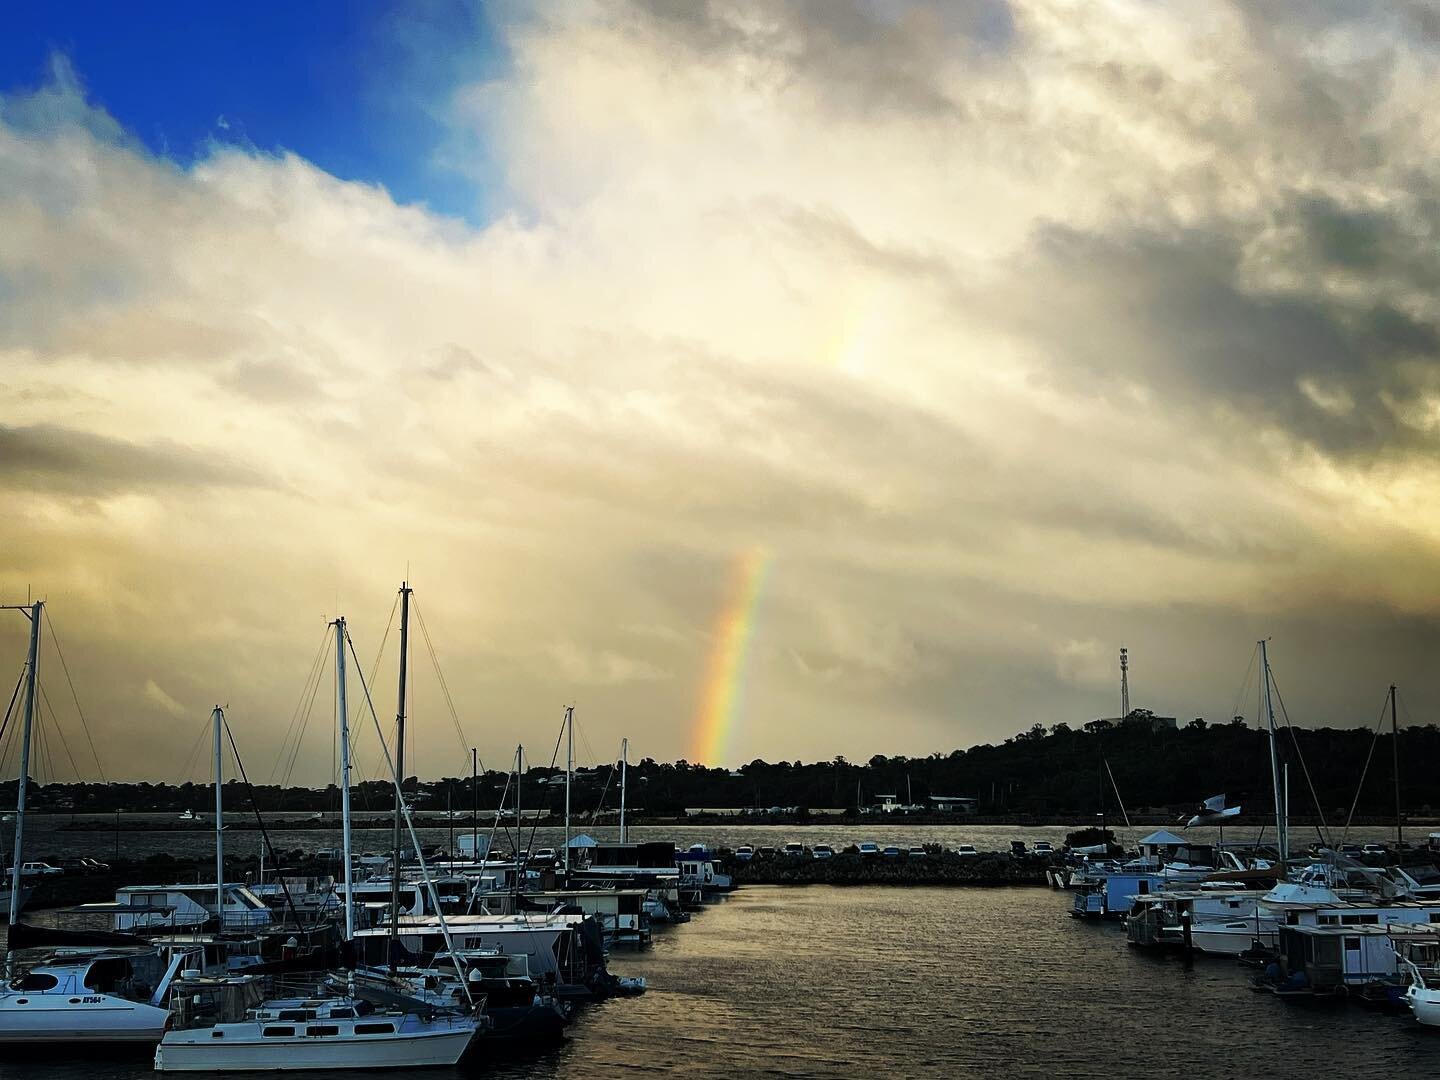 Beautiful rainbow over Port Bouvard Marina this morning 🌈 #mandurahlife ❤️💚💛
.
.
#portbouvardmarina #rainbow #visitmandurah #mandurah #seeperth #boating #boatinglife #westernaustralia  #wathedreamstate #breakawaytourism